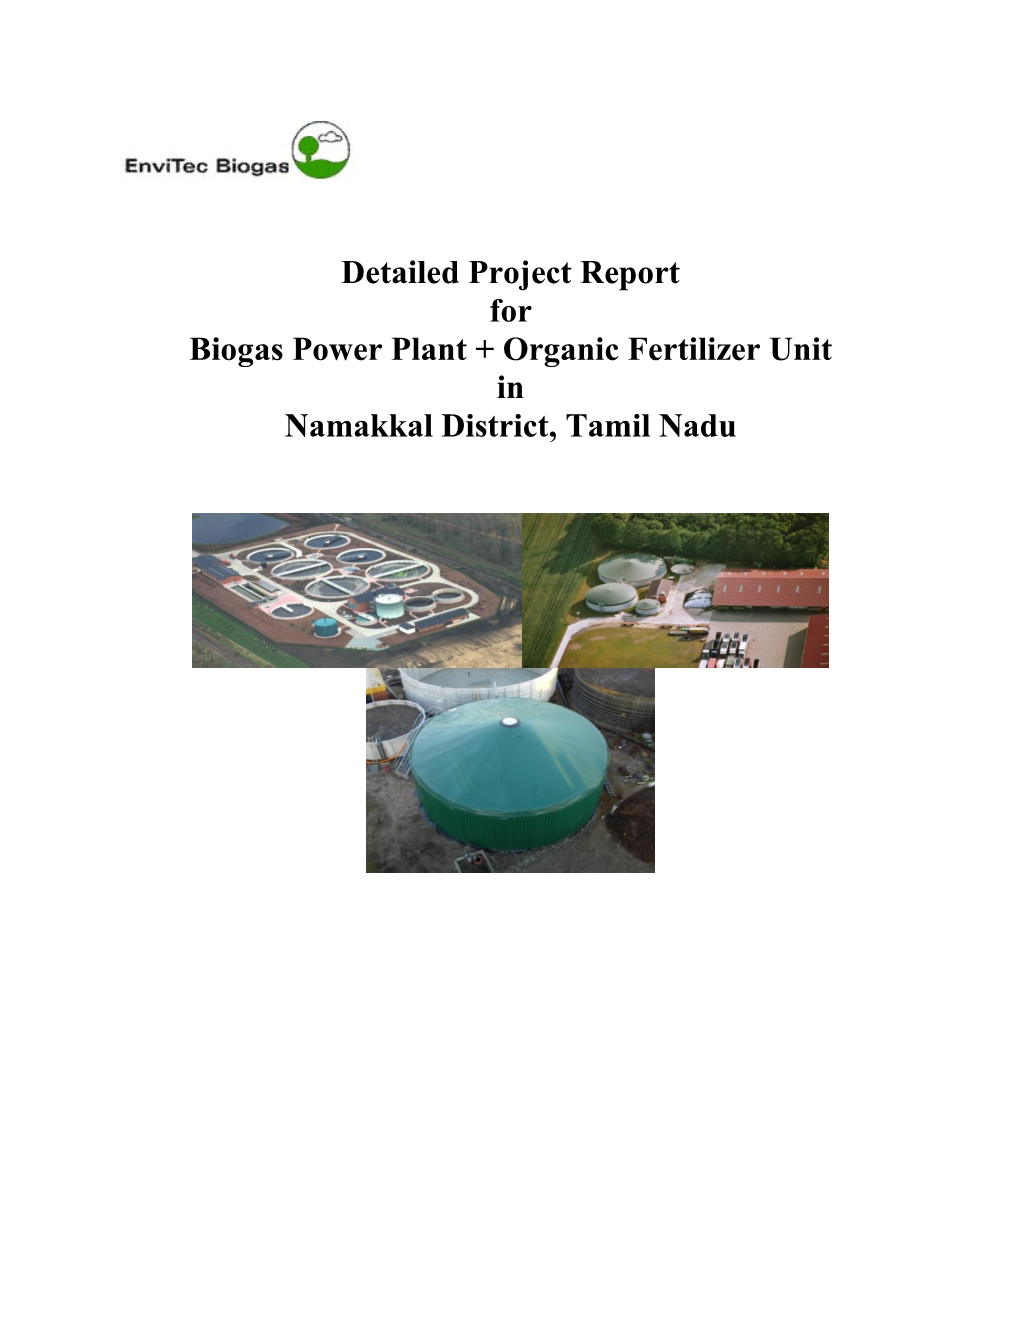 Detailed Project Report for Biogas Power Plant + Organic Fertilizer Unit in Namakkal District, Tamil Nadu